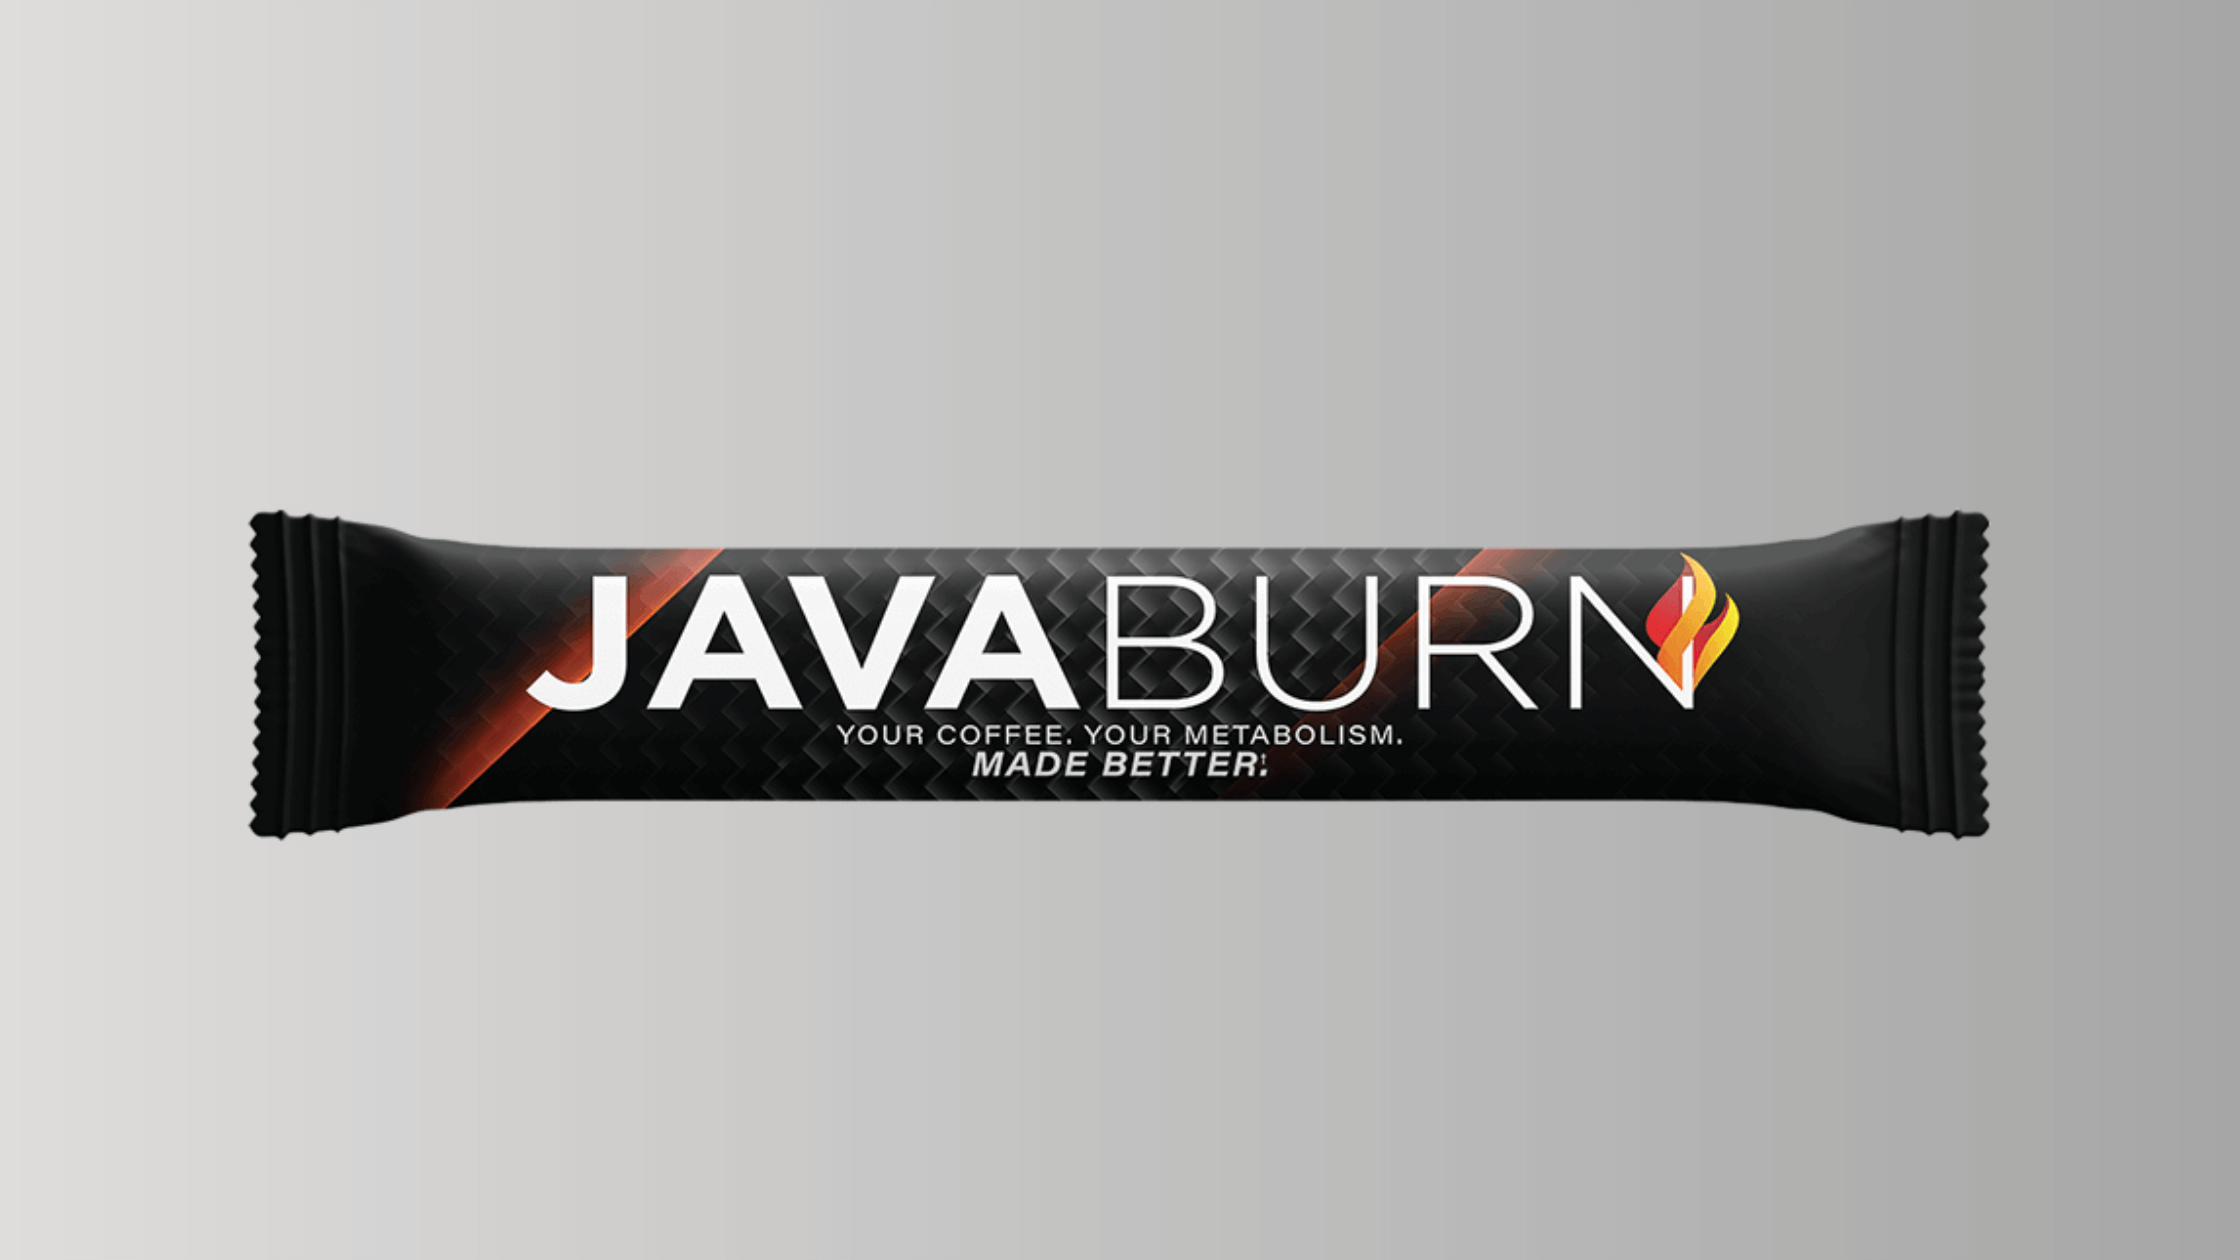 Java Burn Pouch